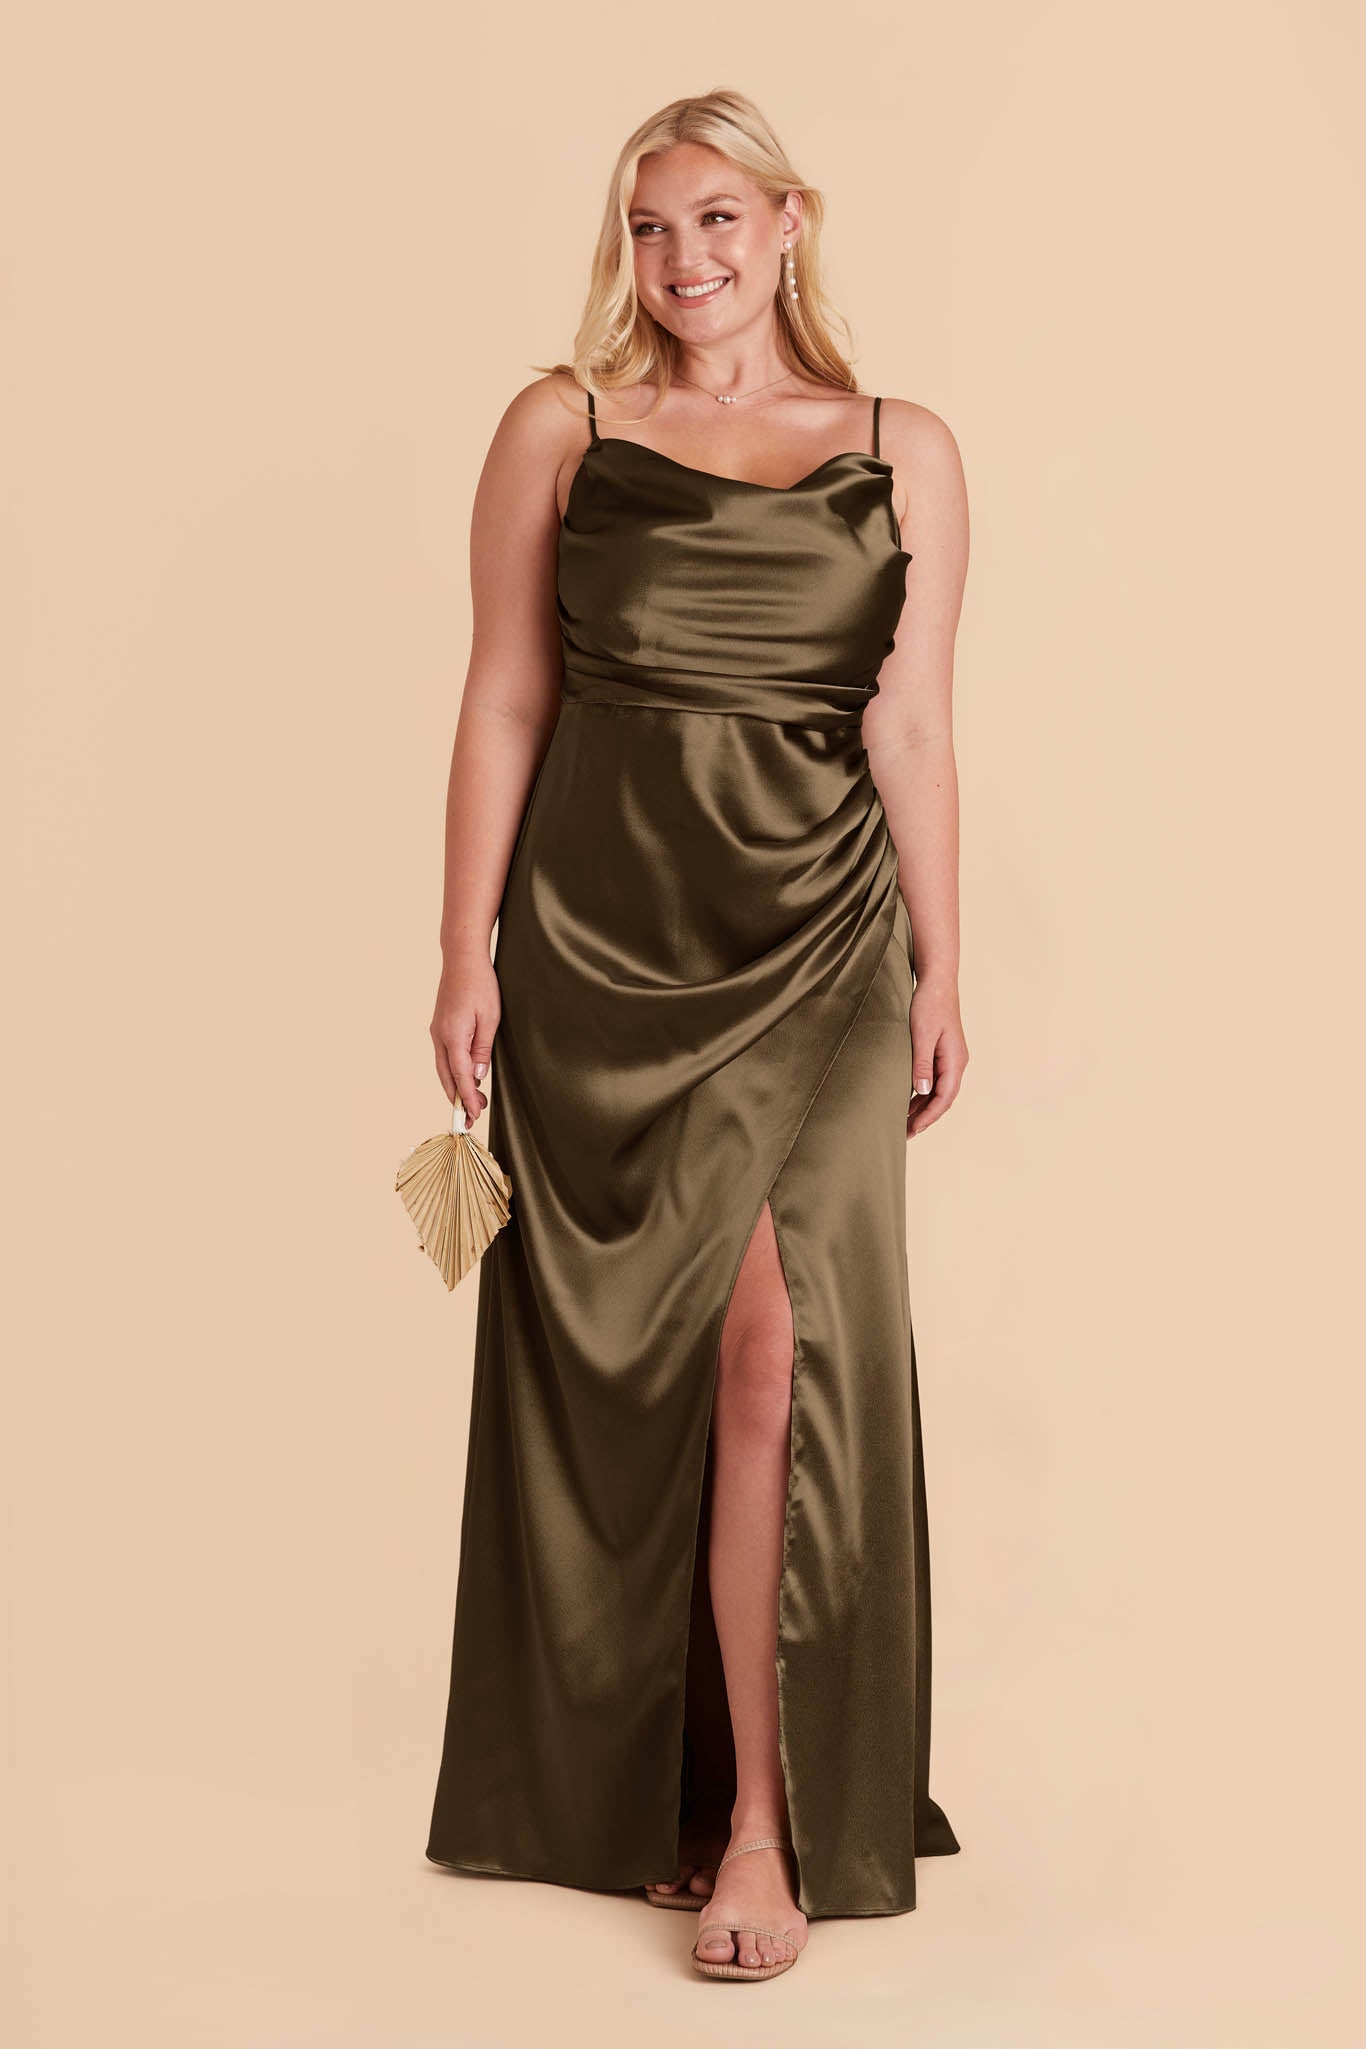 Olive Lydia Satin Dress by Birdy Grey